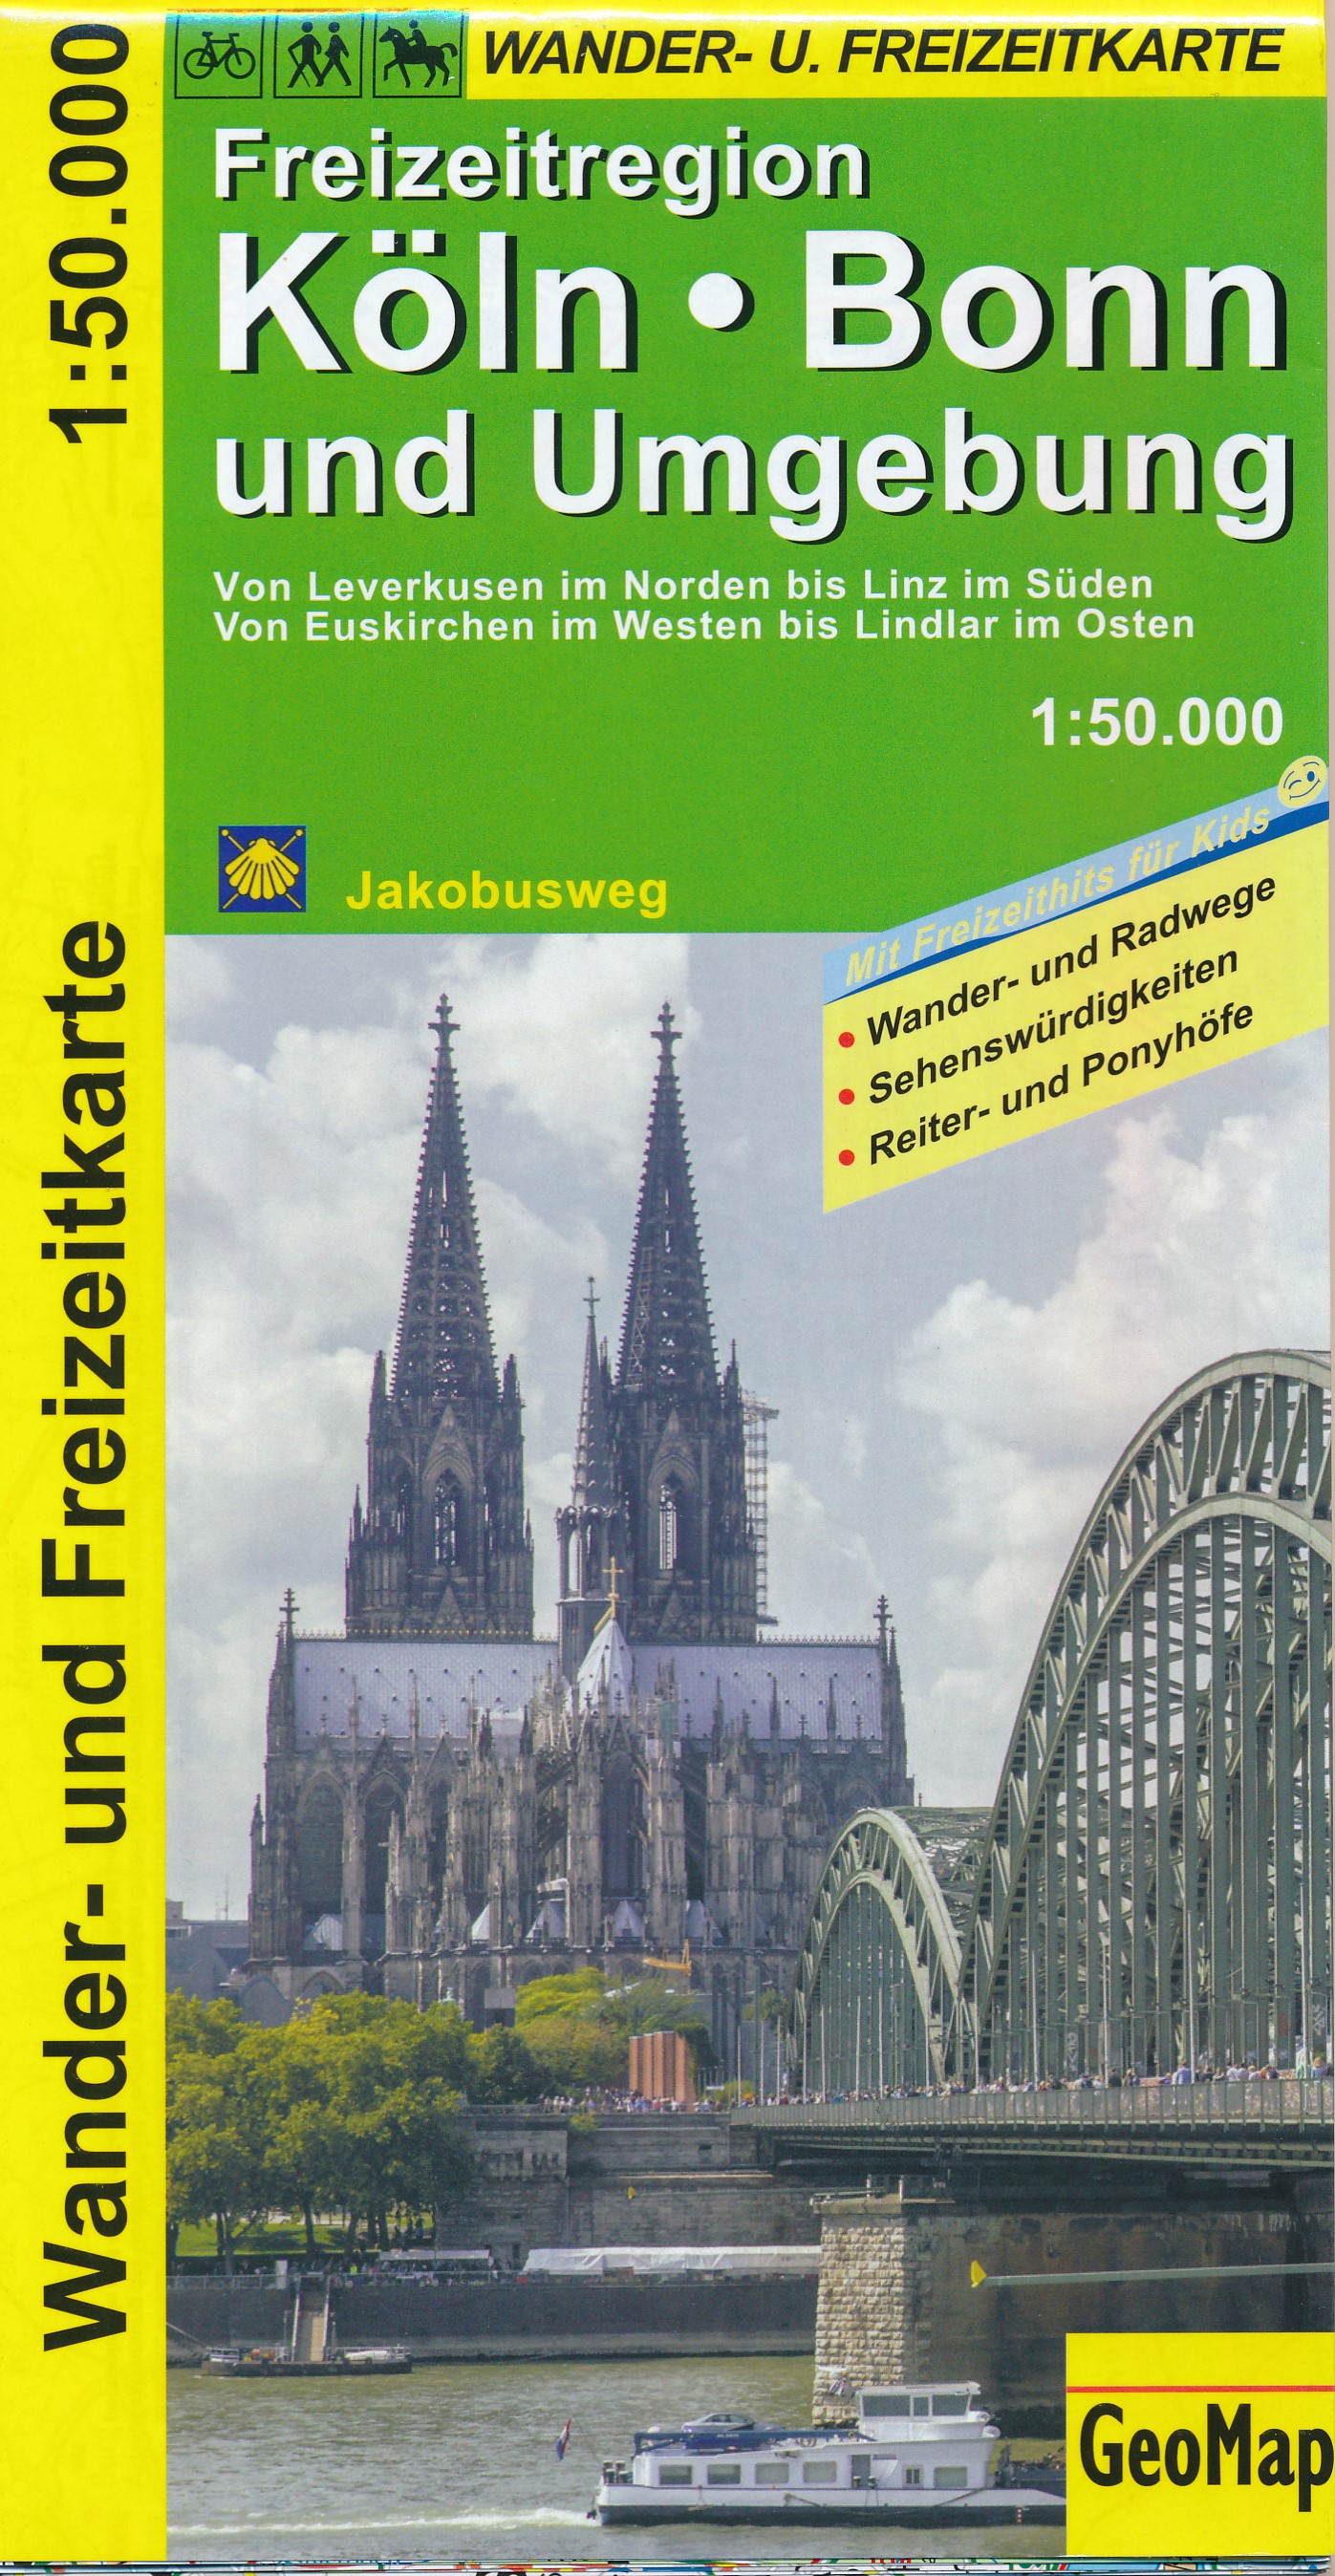 Online bestellen: Wandelkaart - Fietskaart Freizeitregion Köln (Keulen) , Bonn und Umgebung | GeoMap